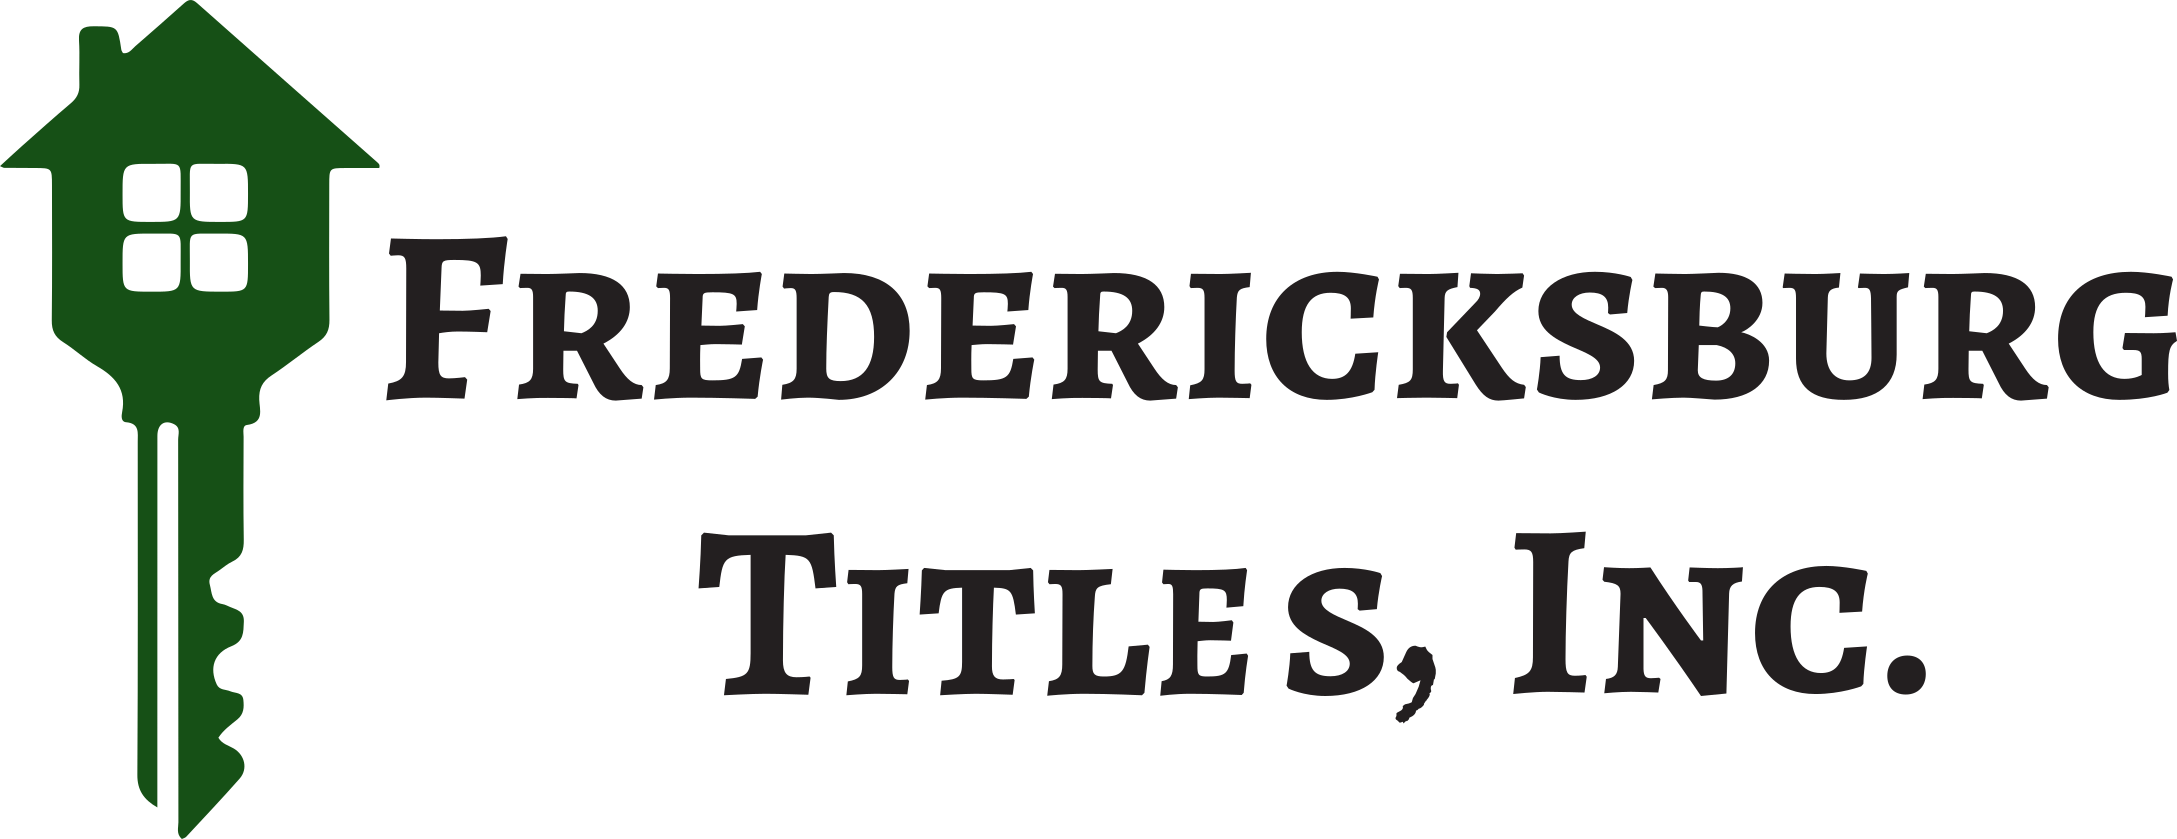 Fredericksburg Titles Inc 2018.png